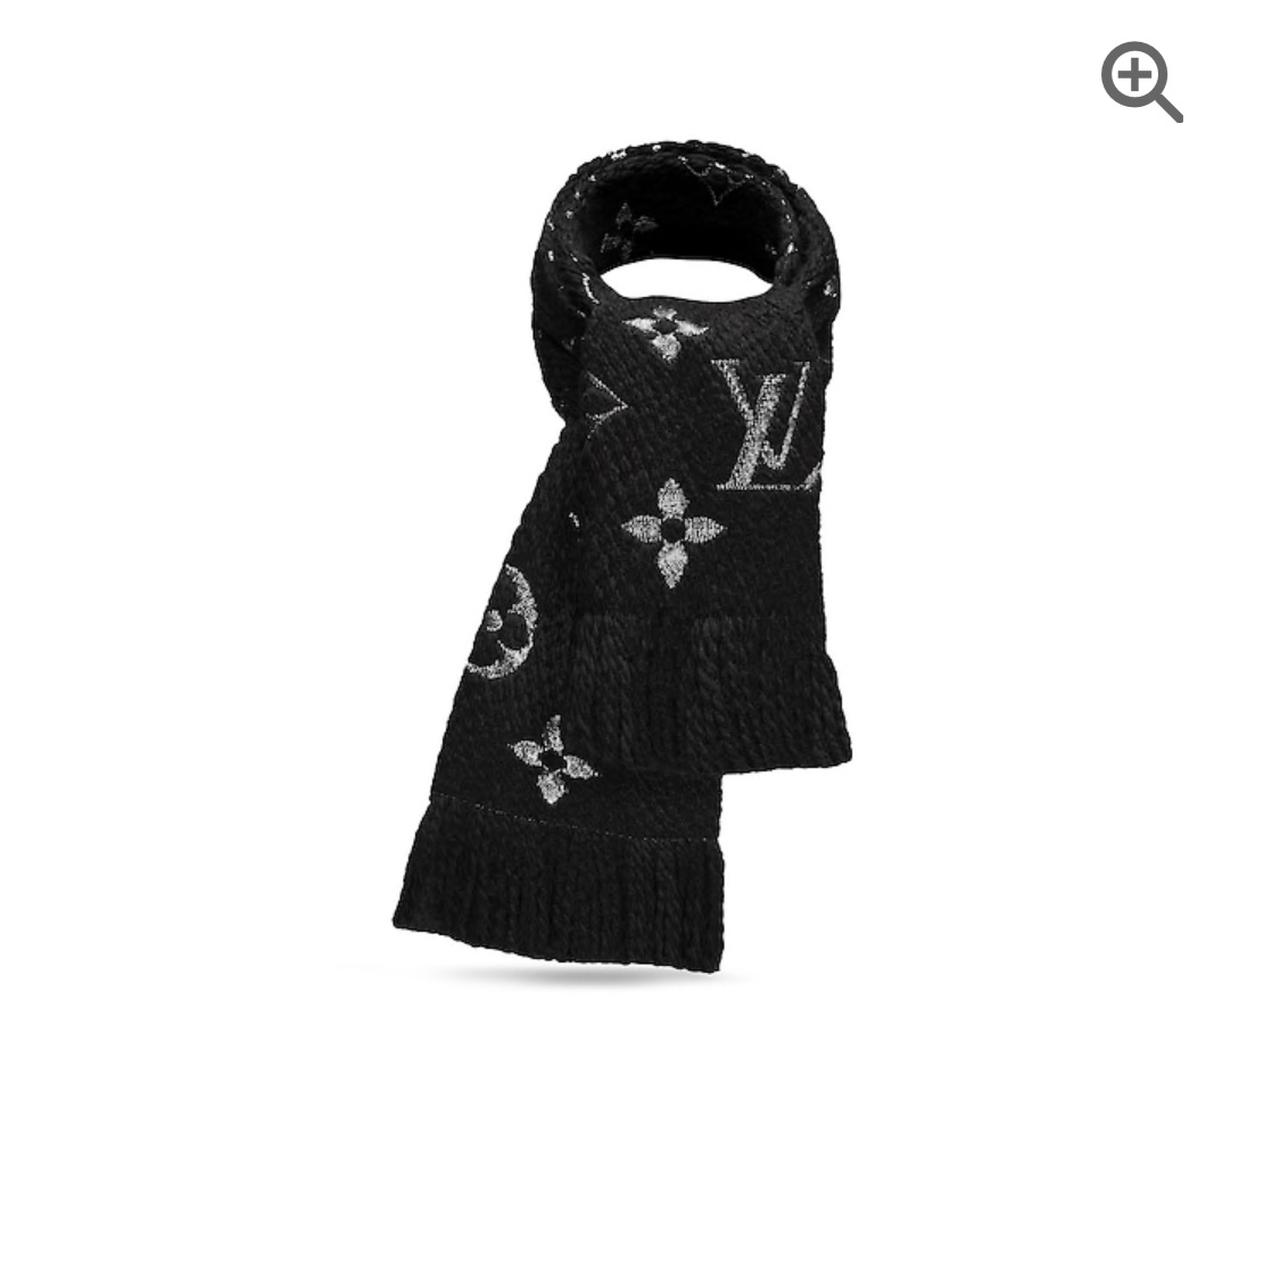 Louis Vuitton Logomania scarf for sale. Such a - Depop